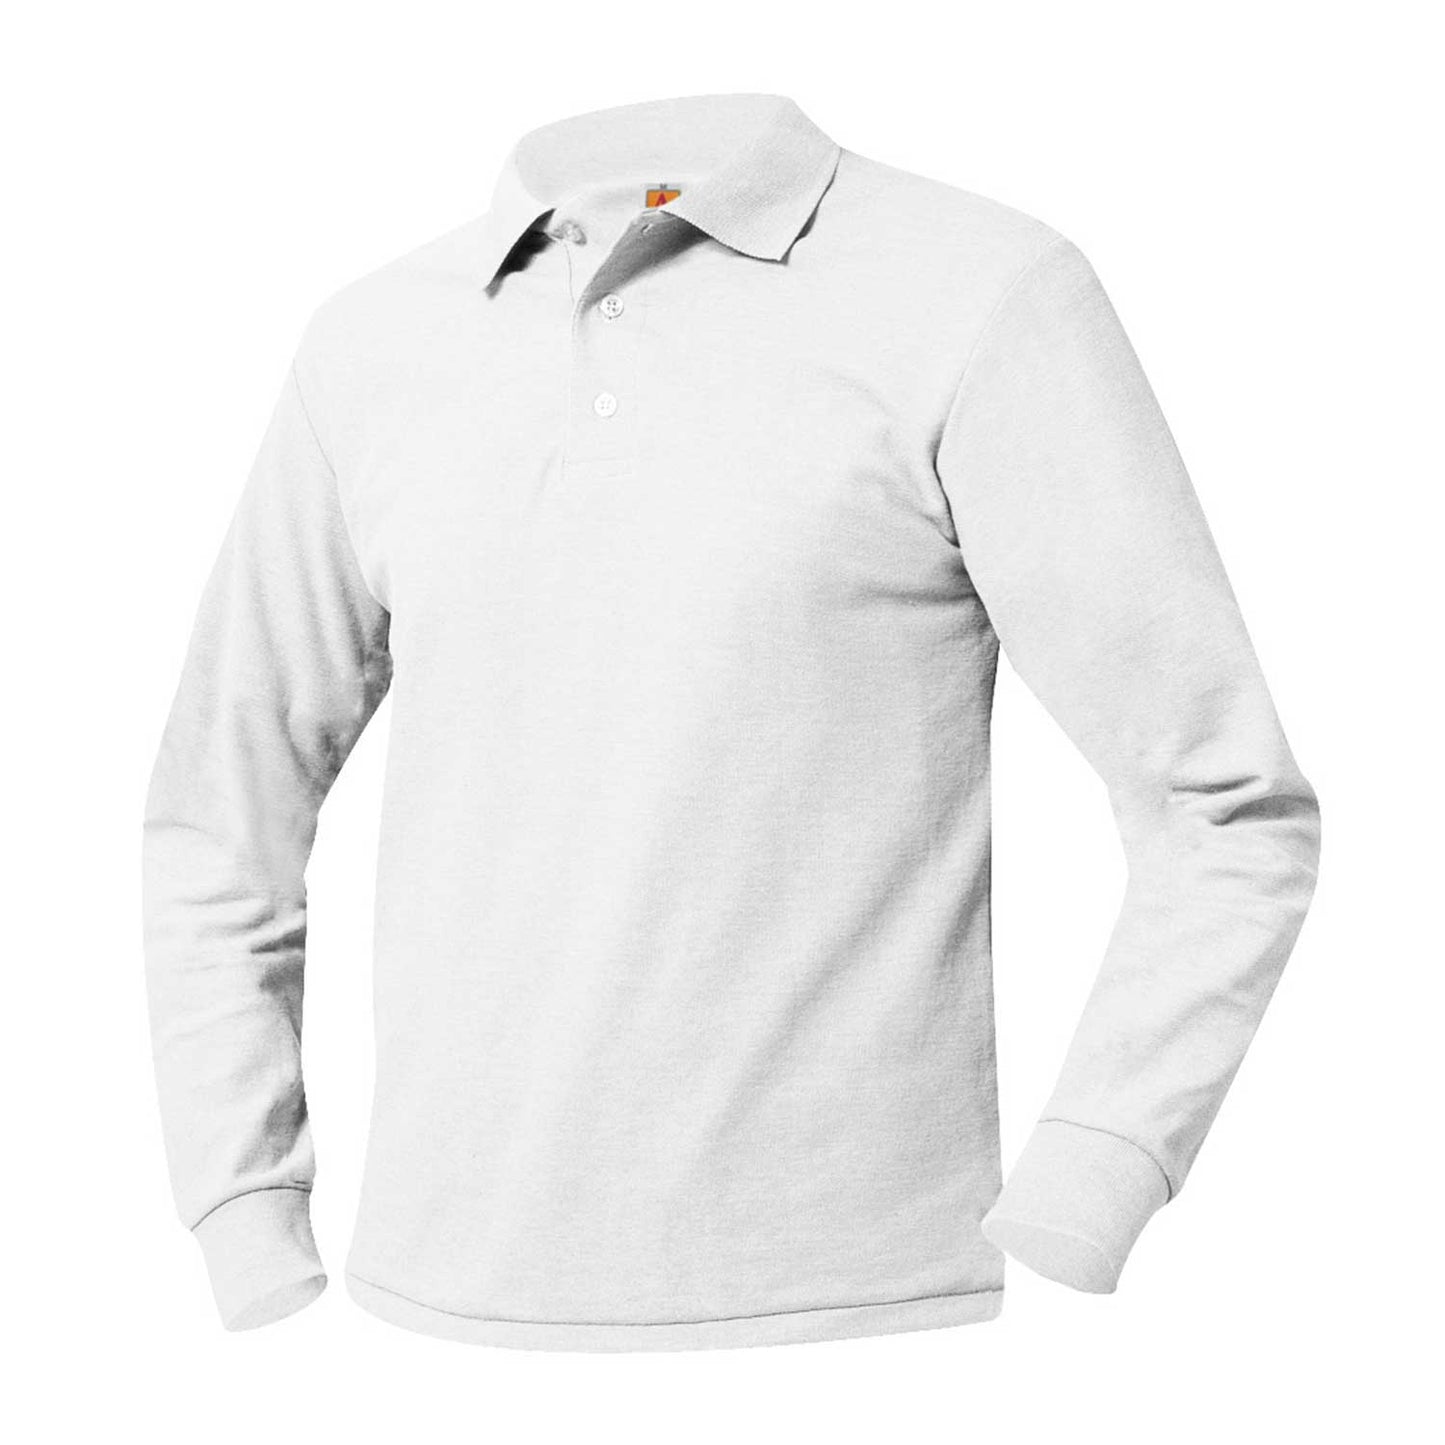 Unisex Pique Polo Shirt, Long Sleeves, Ribbed Cuffs w/Logo - 1104